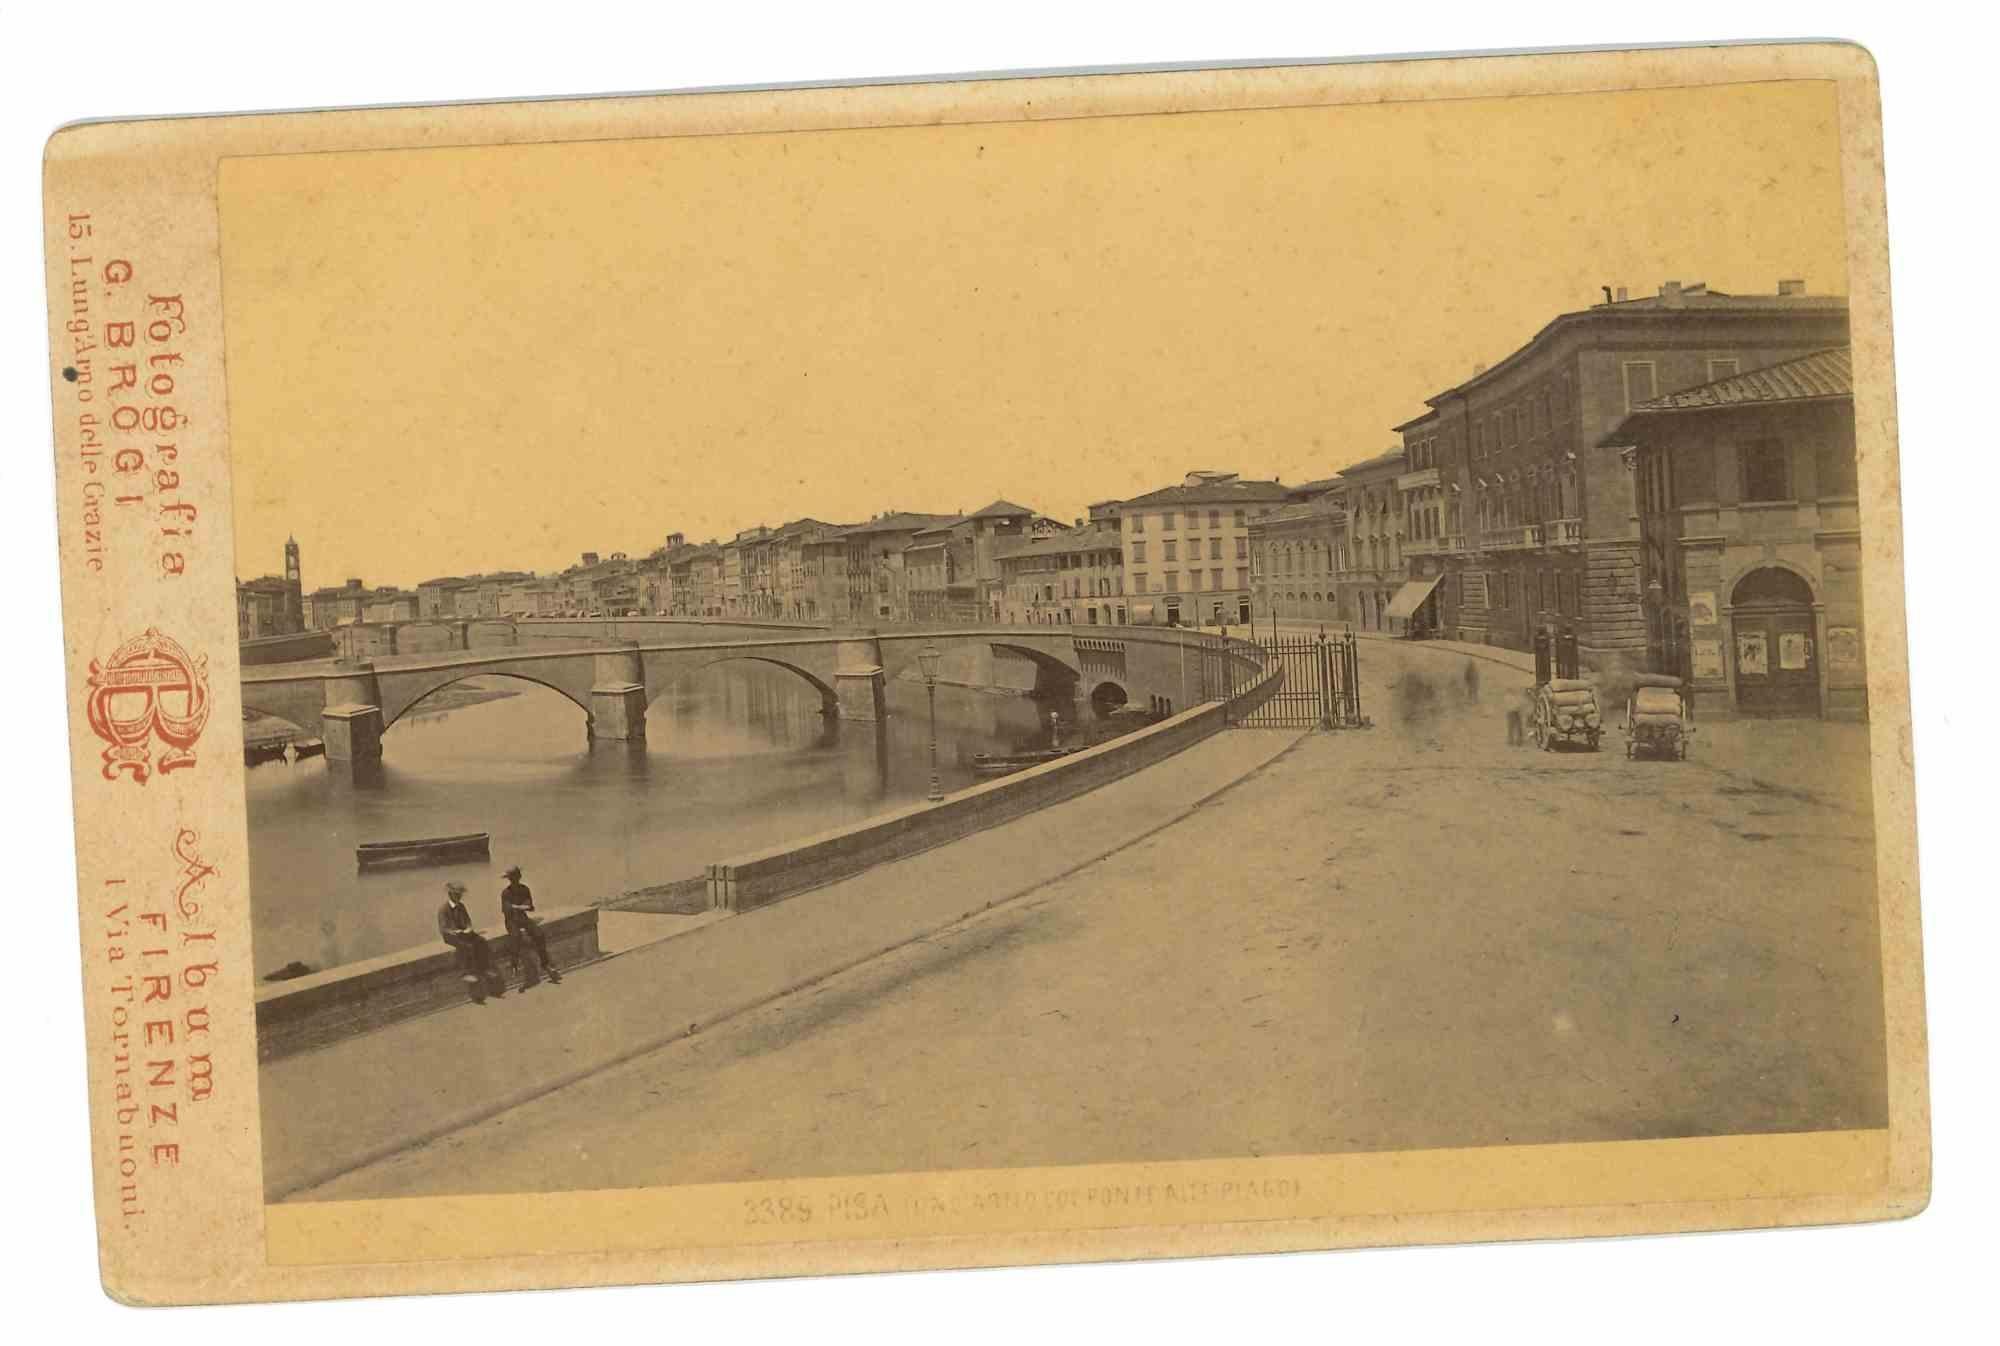 Figurative Photograph Unknown - The Old Days - Pise, Lungarno Regio - Fin du 19e siècle